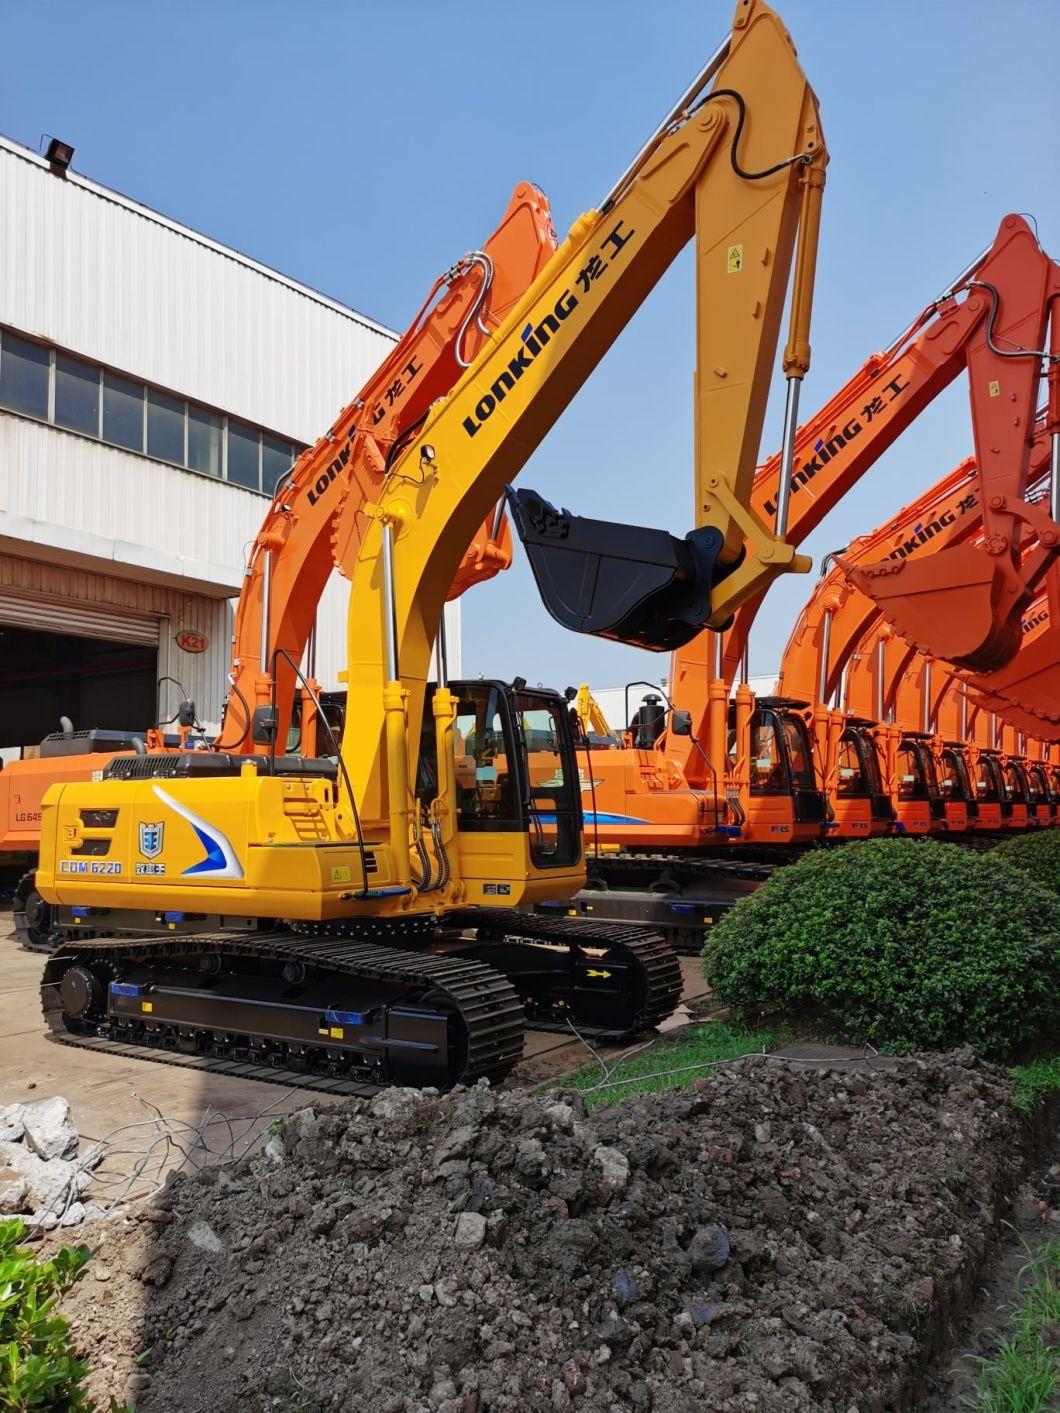 China EXW Price Lonking Lovol San Y Liugong Zoomlion 21.5 22 22.5 Ton Excavator Cdm6220 (LG6225E)